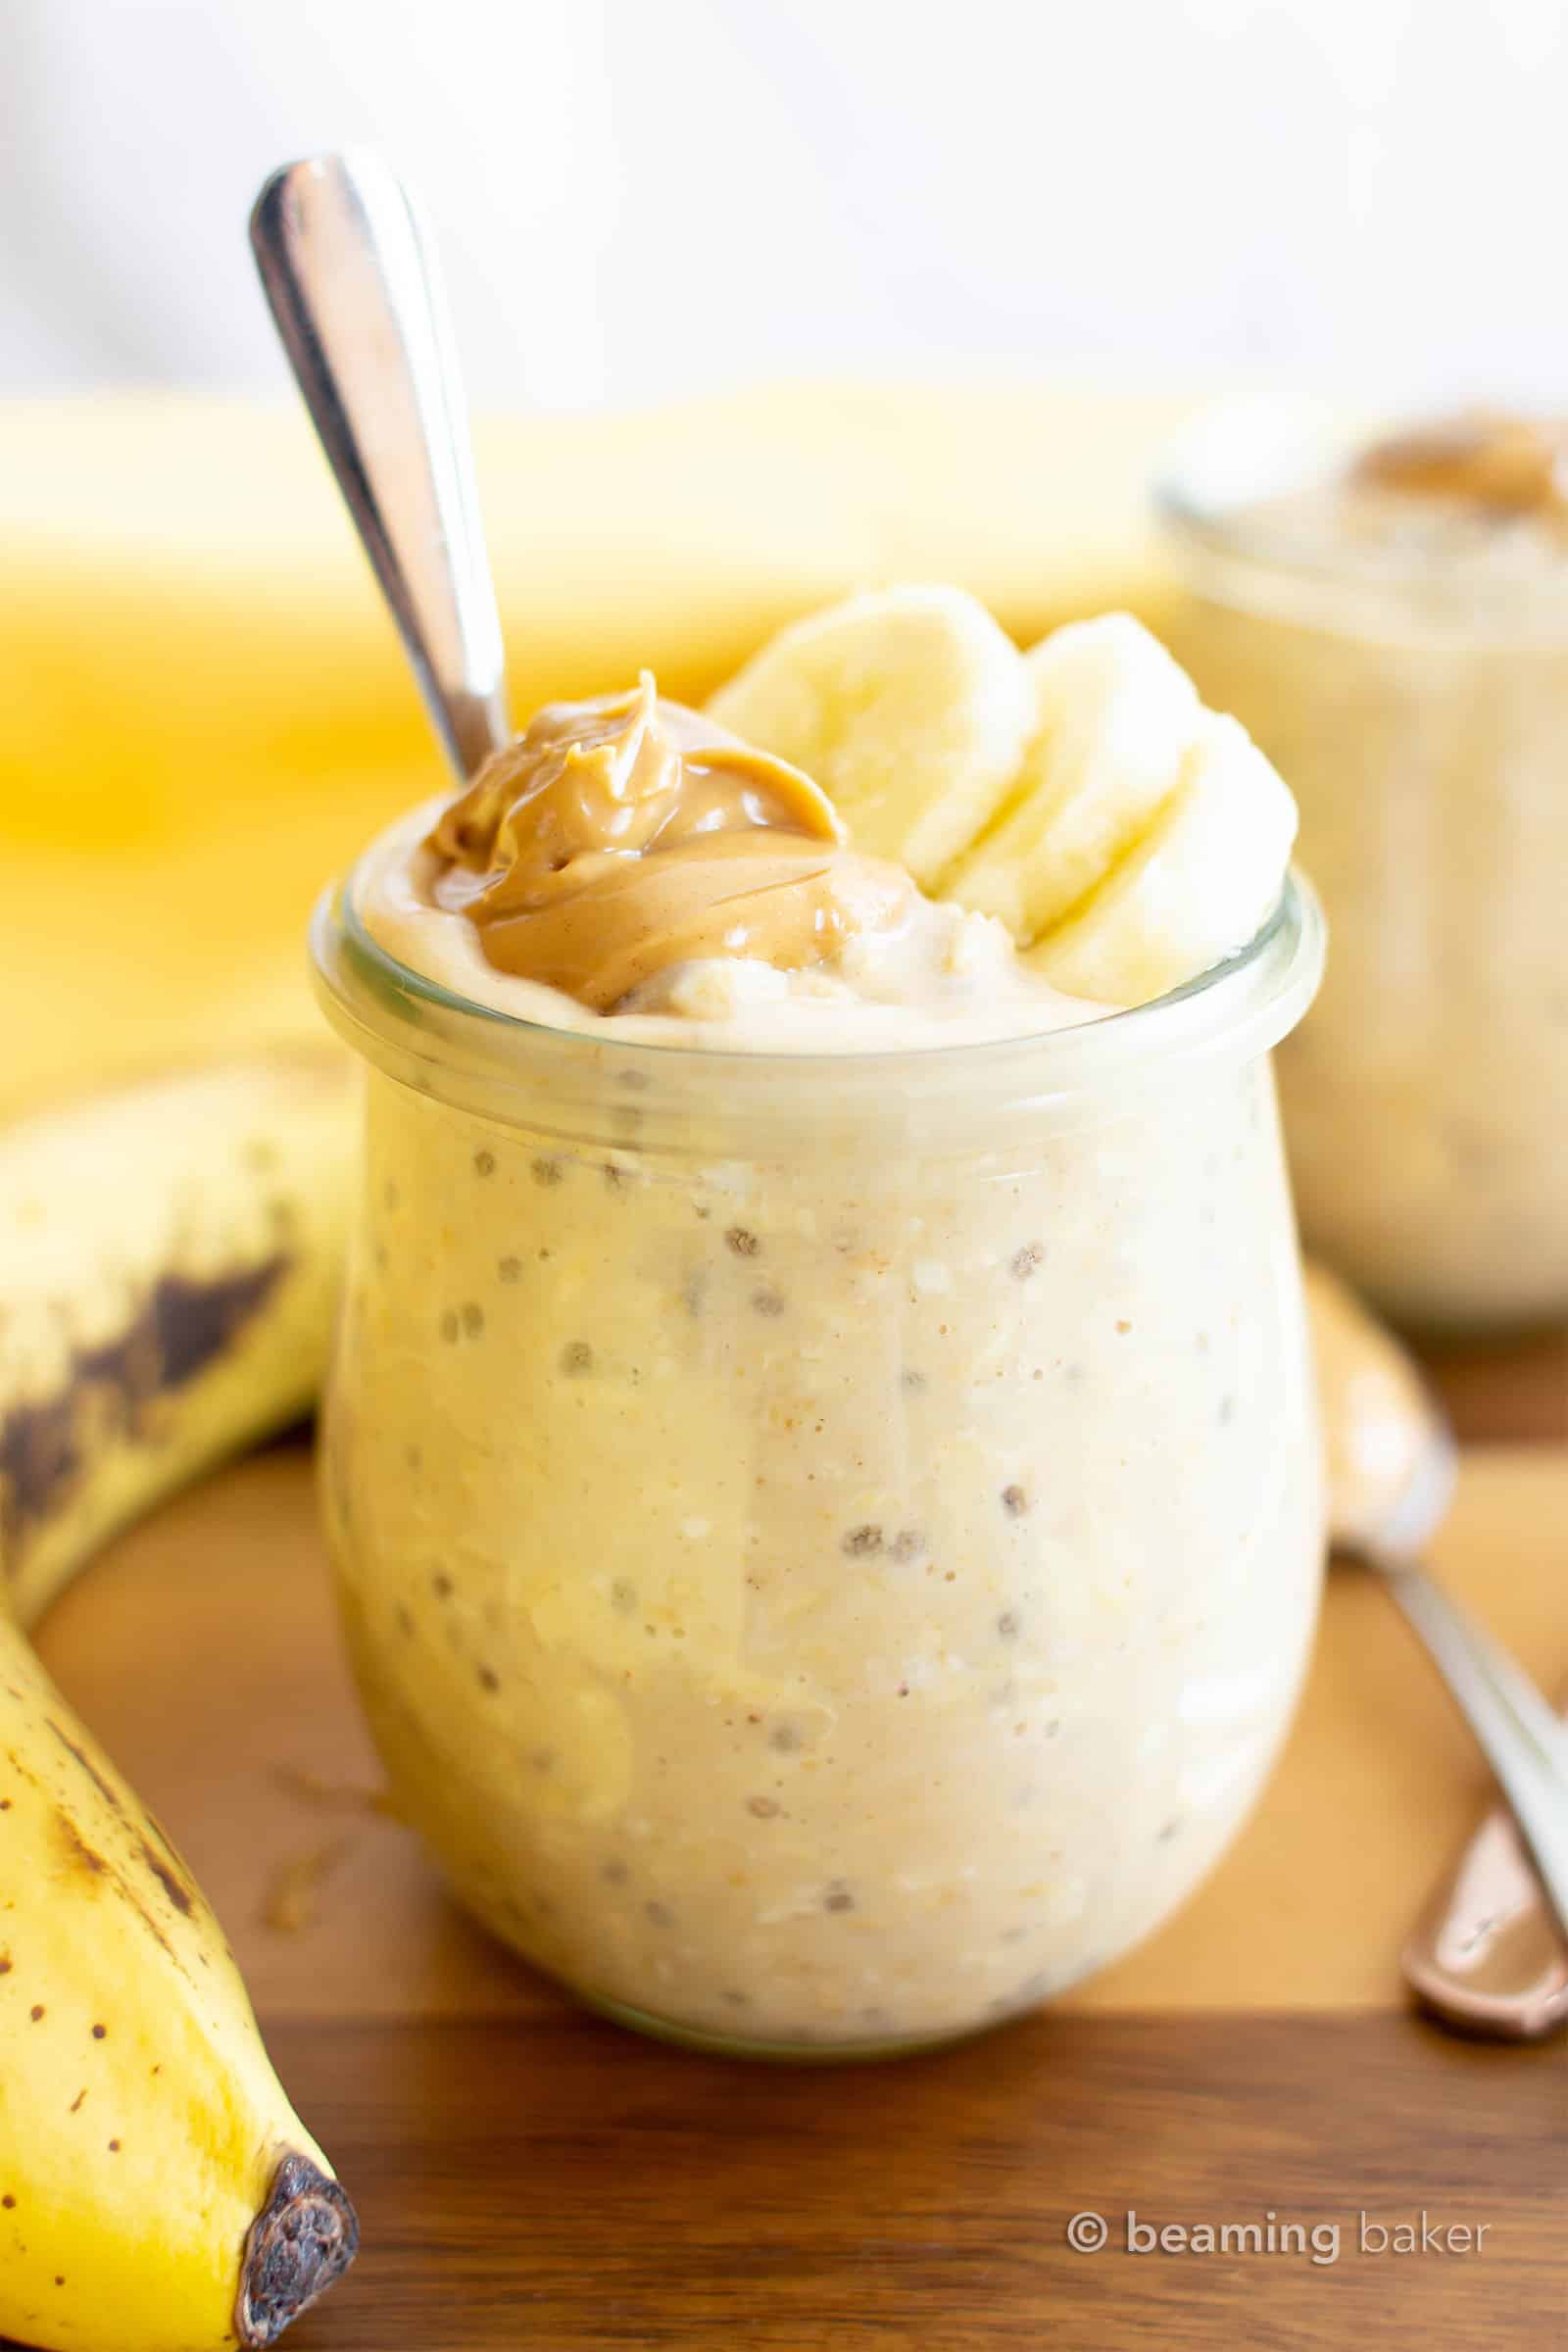 Easy Peanut Butter Banana Overnight Oats Recipe (Vegan): a quick recipe for vegan overnight oats with banana & peanut butter! Healthy, gluten free & delicious. #OvernightOats #PeanutButter #Banana #Vegan | Recipe at BeamingBaker.com